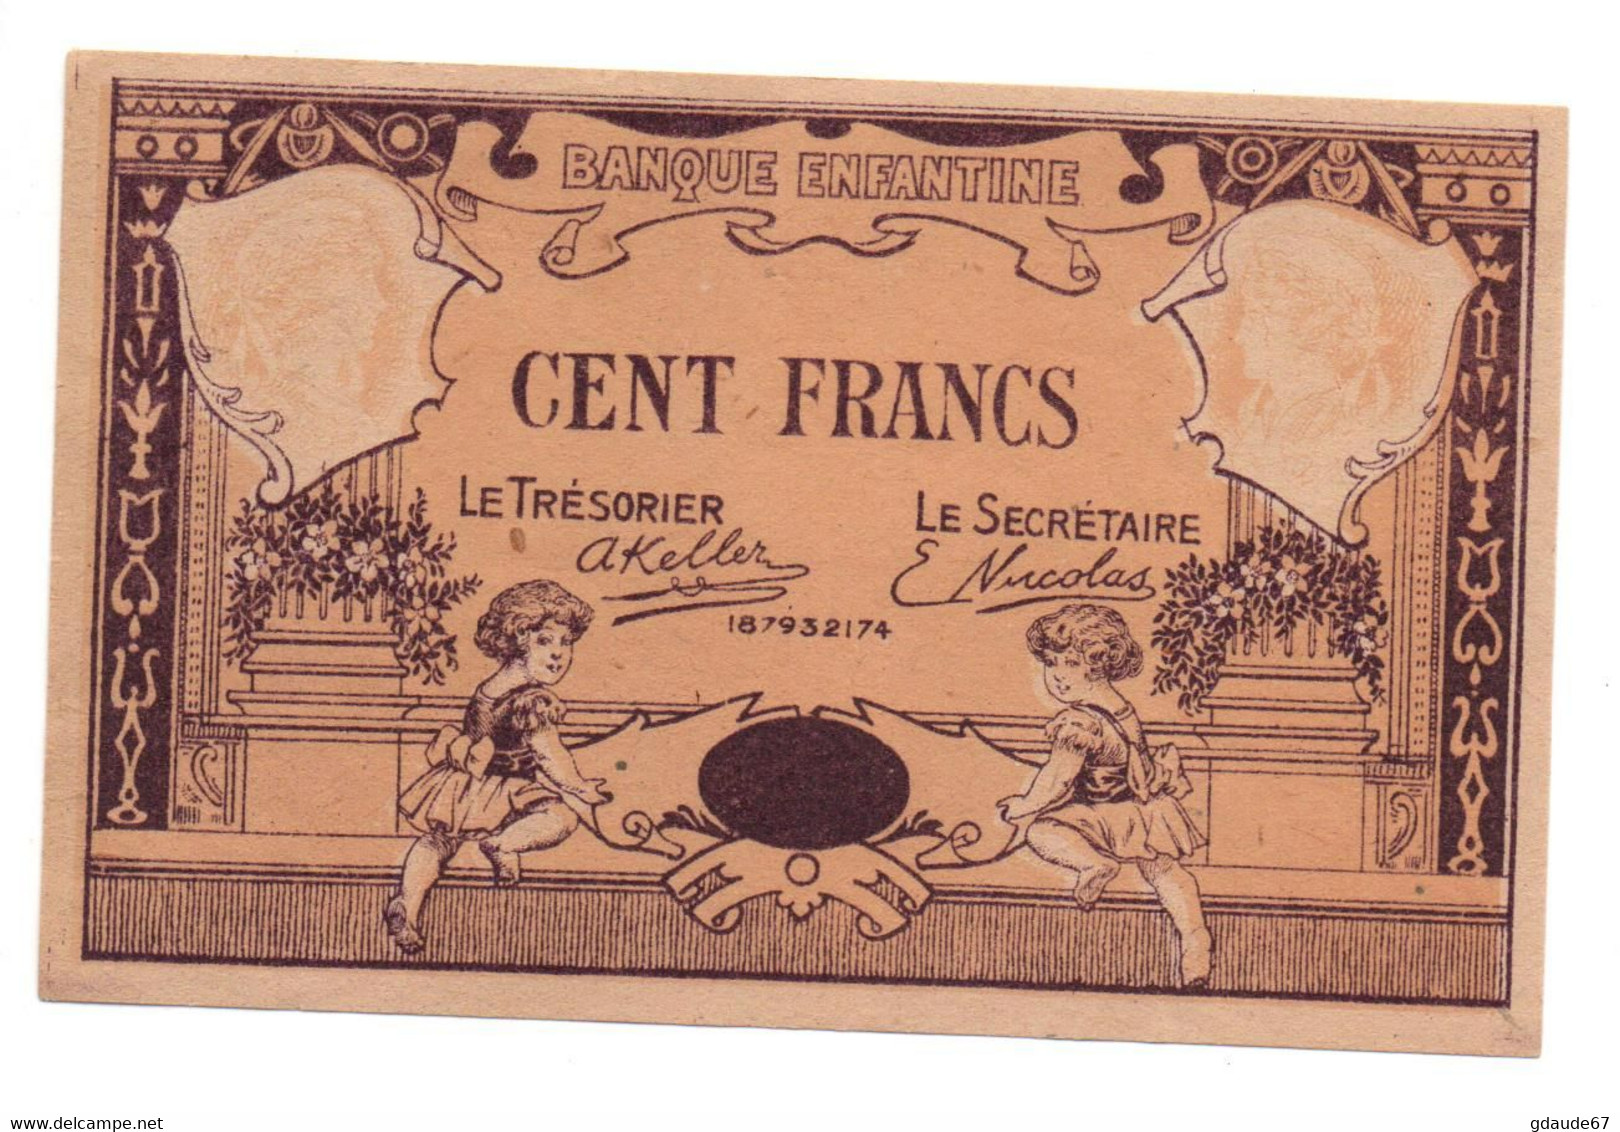 BANQUE ENFANTINE - BILLET DE CENT 100 FRANCS MONOFACE NEUF (POSTE ENFANTINE) - Specimen